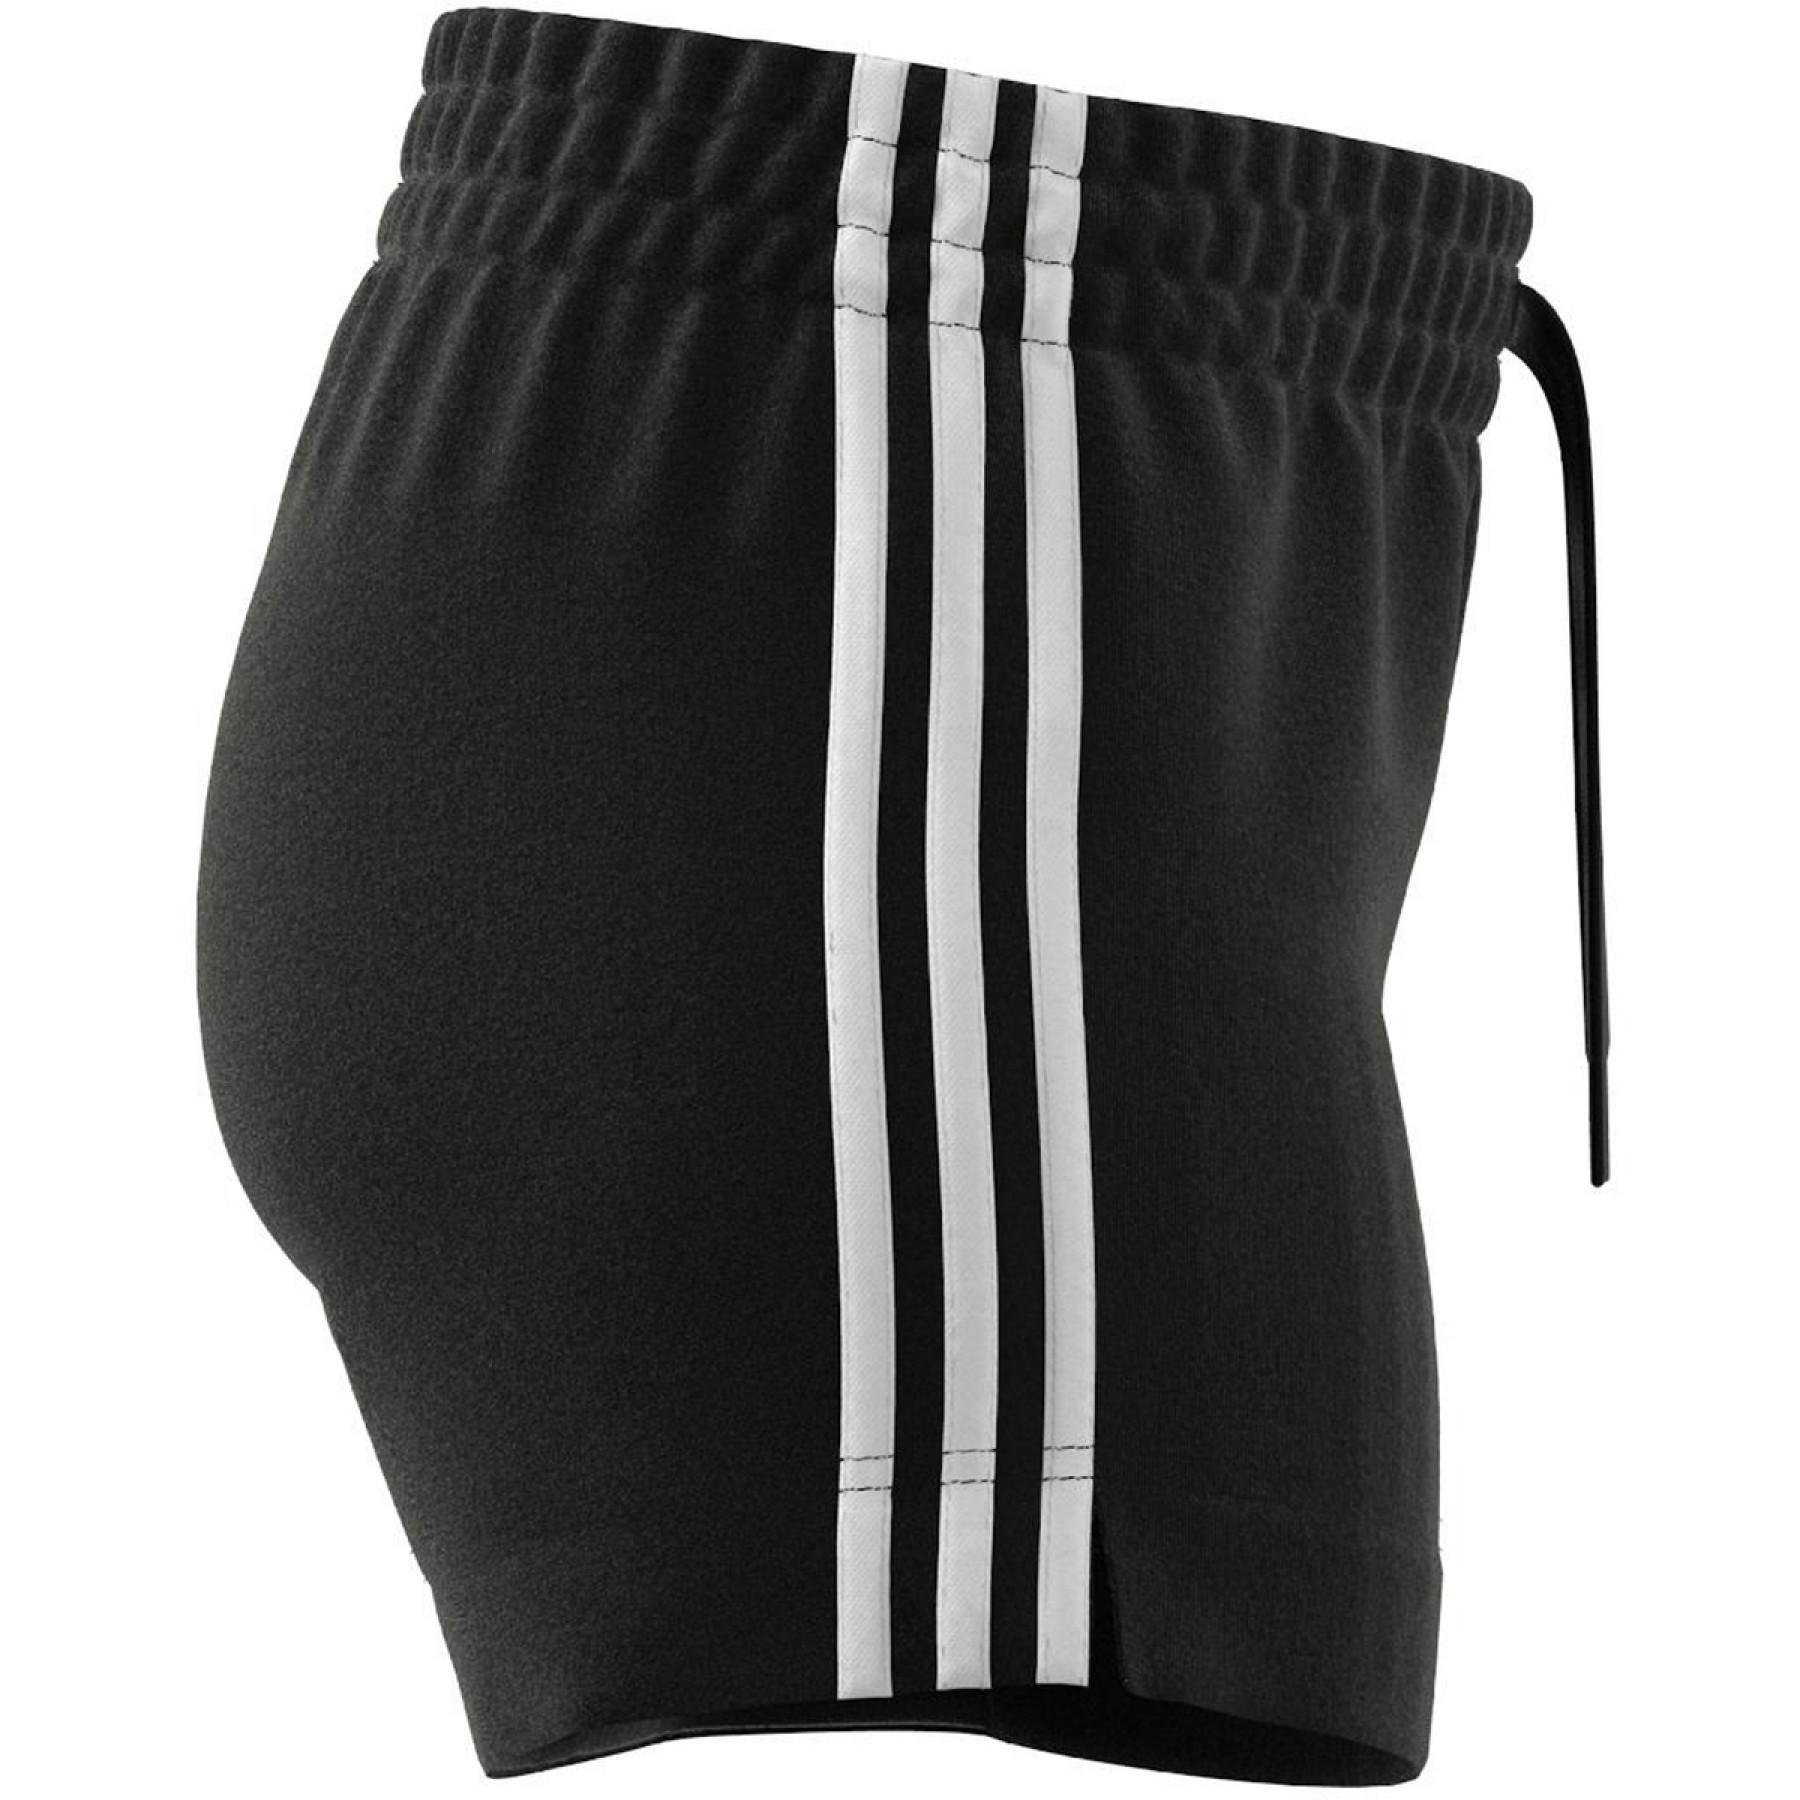 Women's shorts adidas Essential slim 3-Bandes